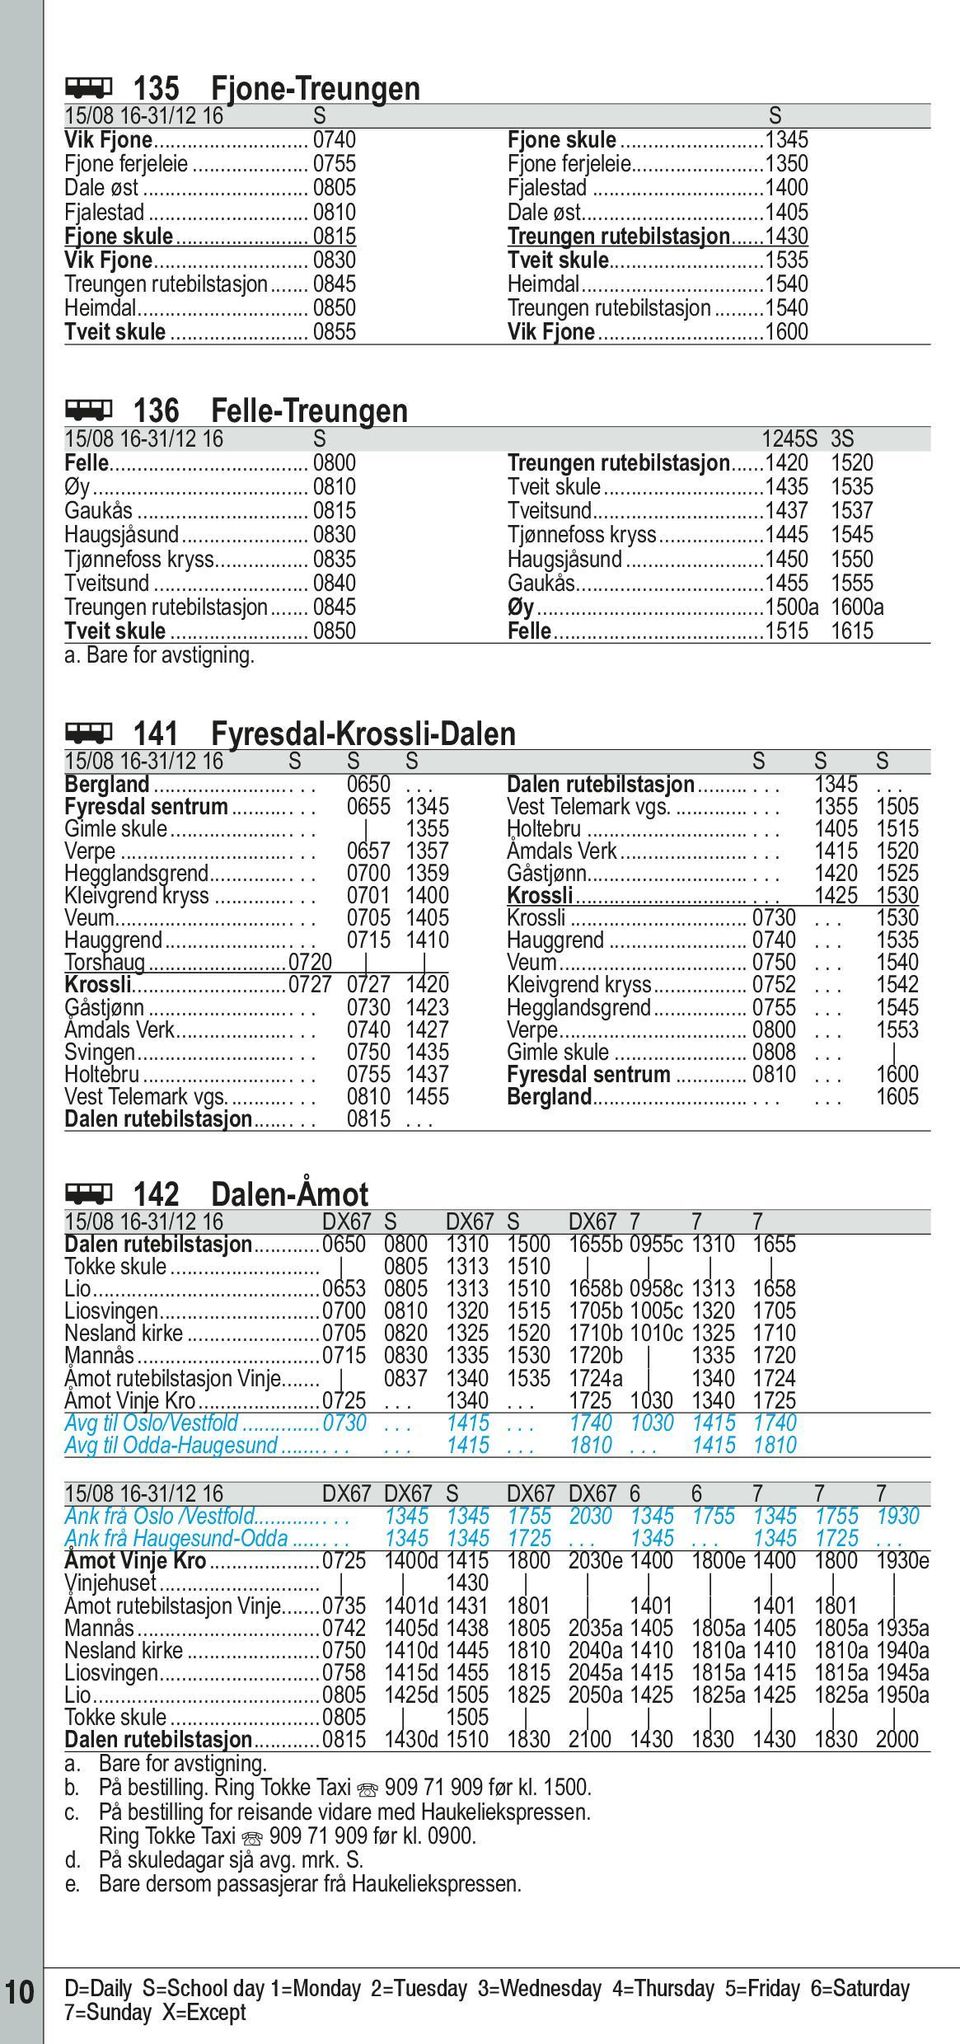 .. 0855 Vik Fjone...1600 ÿ 136 Felle-Treungen 15/08 16-31/12 16 S 1245S 3S Felle... 0800 Treungen rutebilstasjon...1420 1520 Øy... 0810 Tveit skule...1435 1535 Gaukås... 0815 Tveitsund.